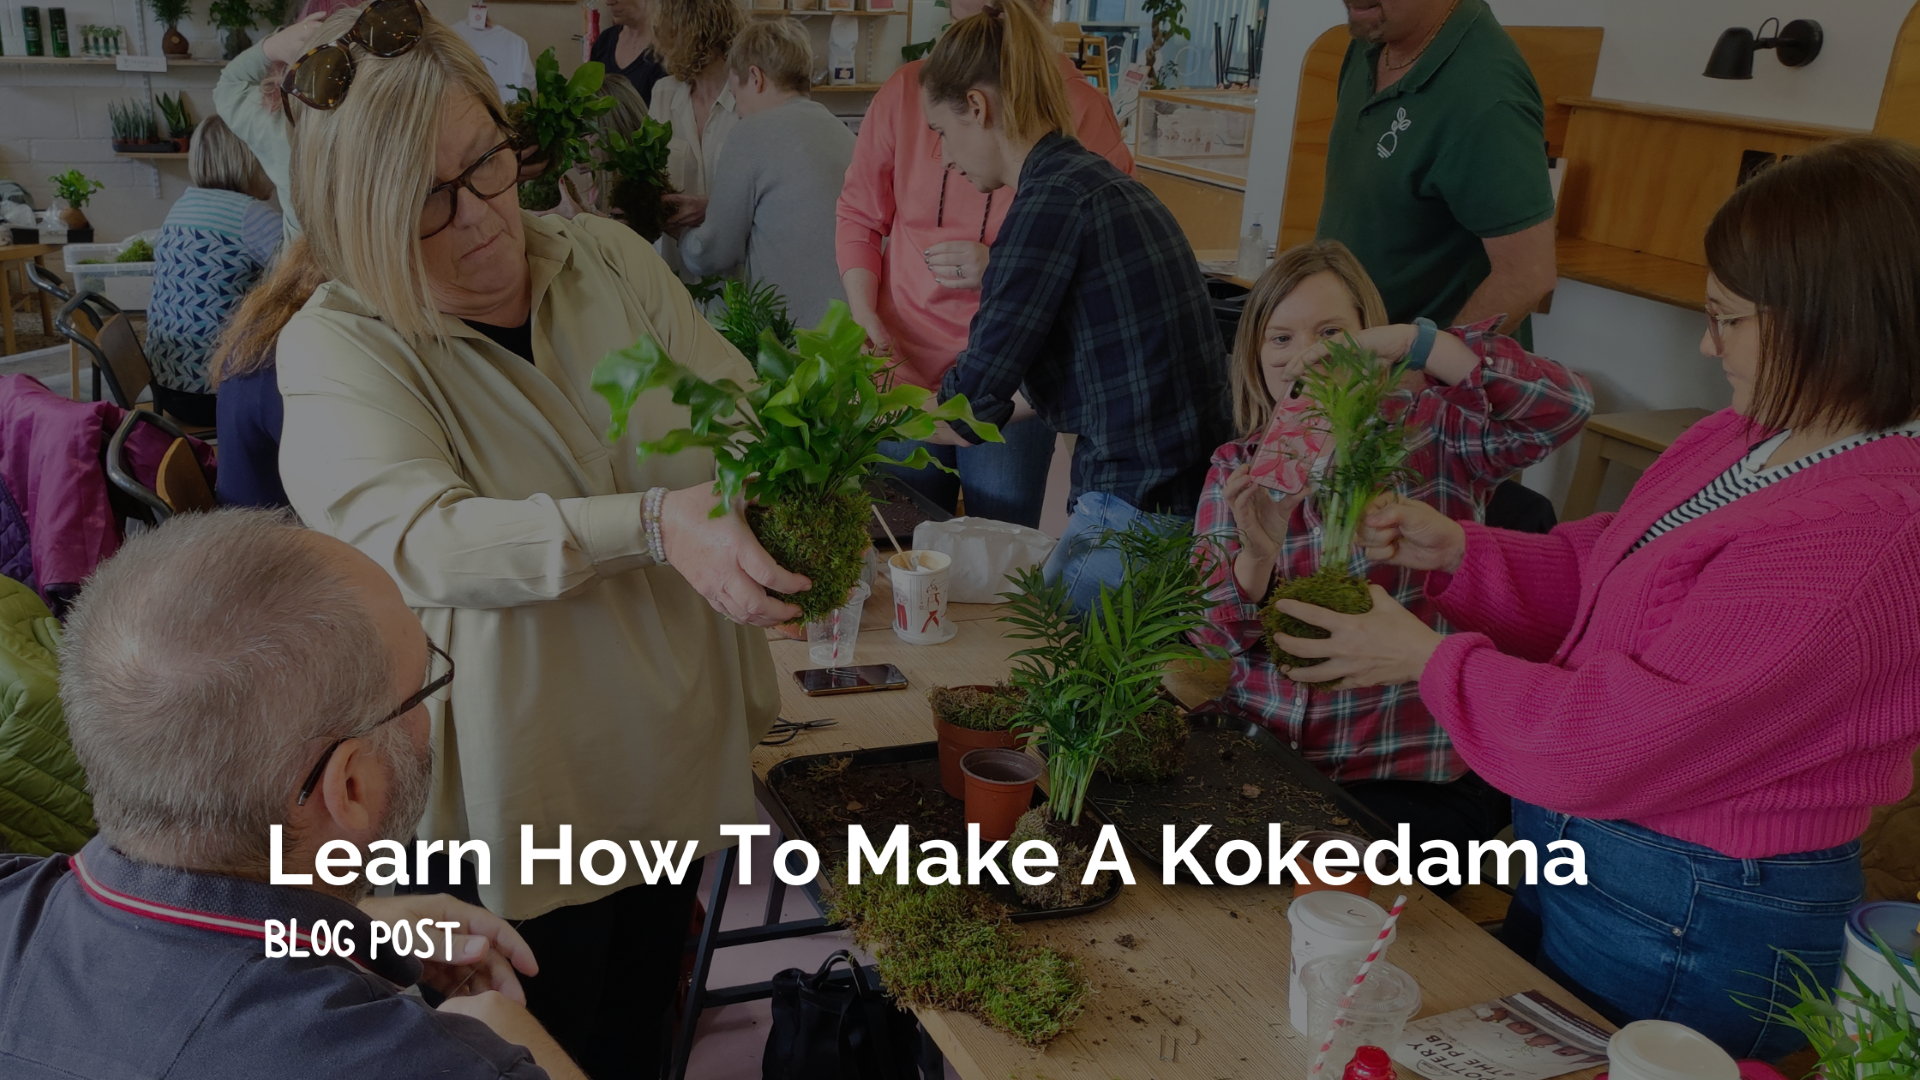 Learn How to Make Your Own Kokedama Moss Ball Houseplant